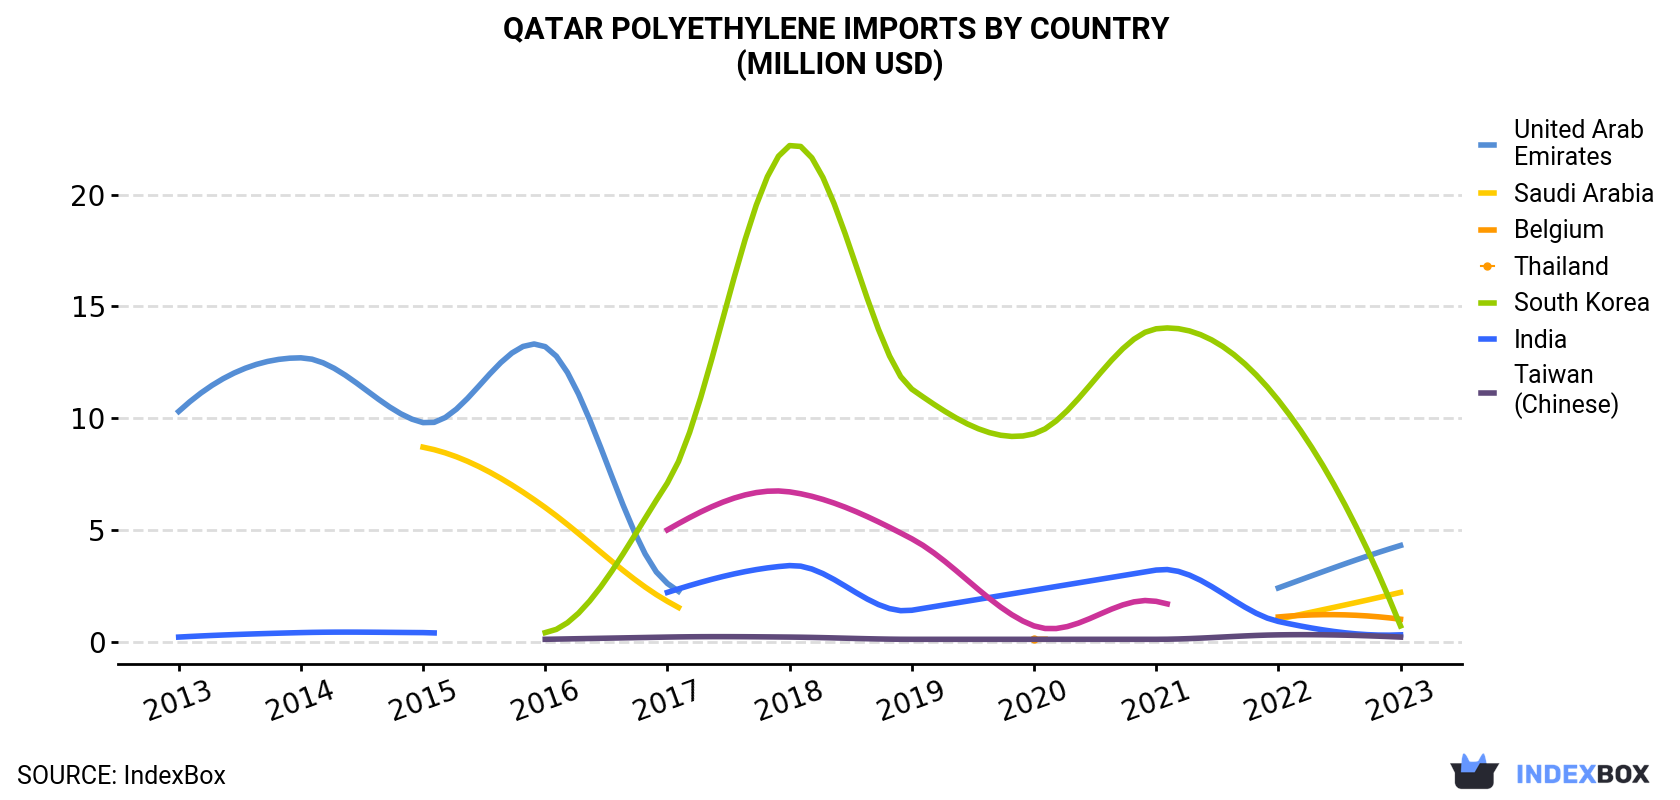 Qatar Polyethylene Imports By Country (Million USD)